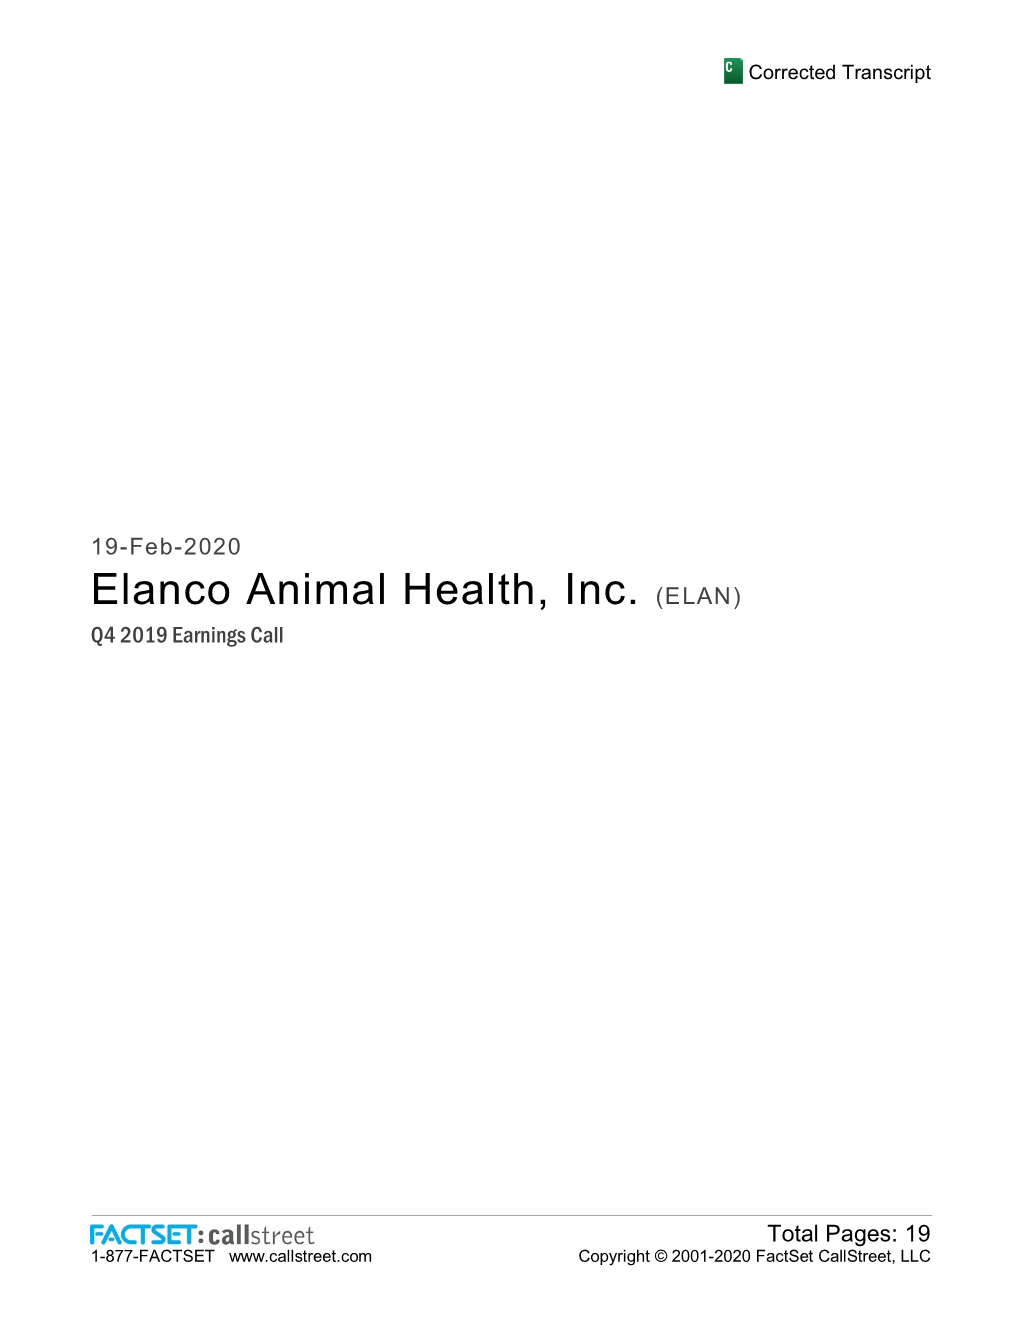 Elanco Animal Health, Inc. (ELAN) Q4 2019 Earnings Call